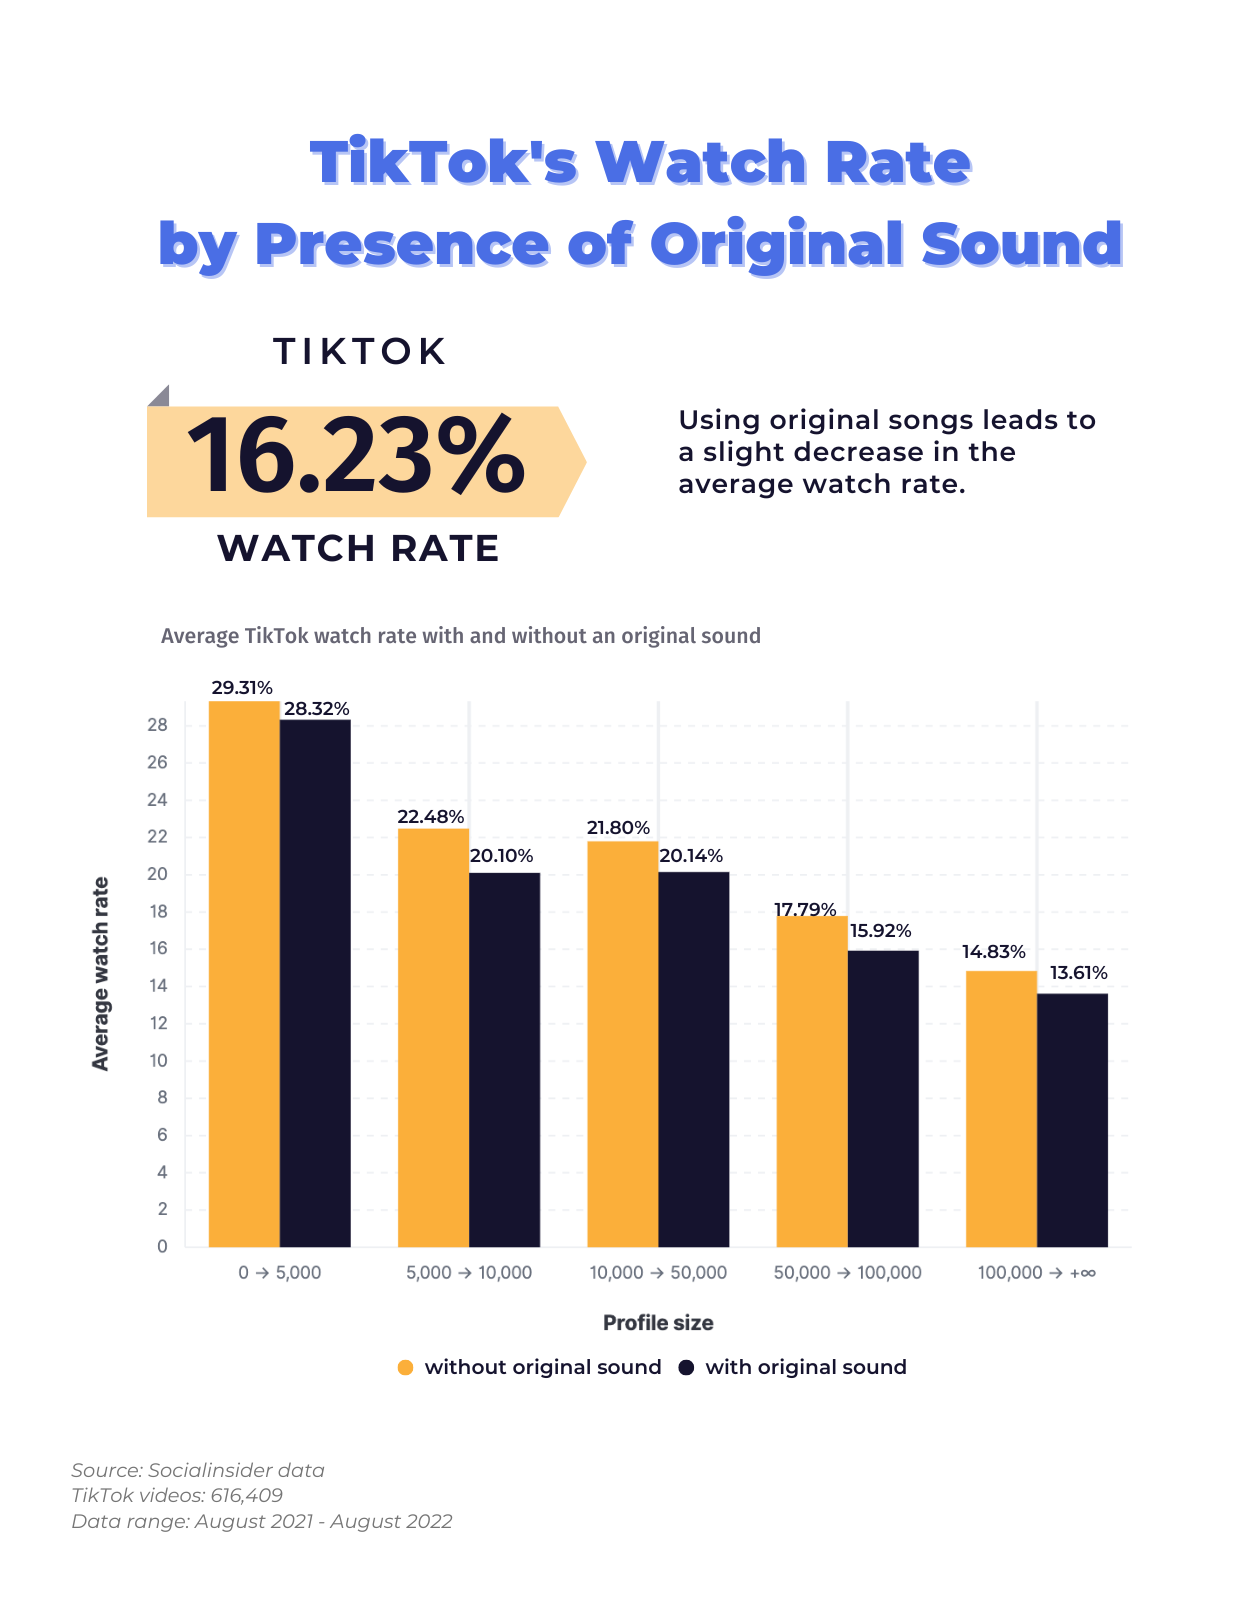 TikTok's average watch rate by usage of original sounds